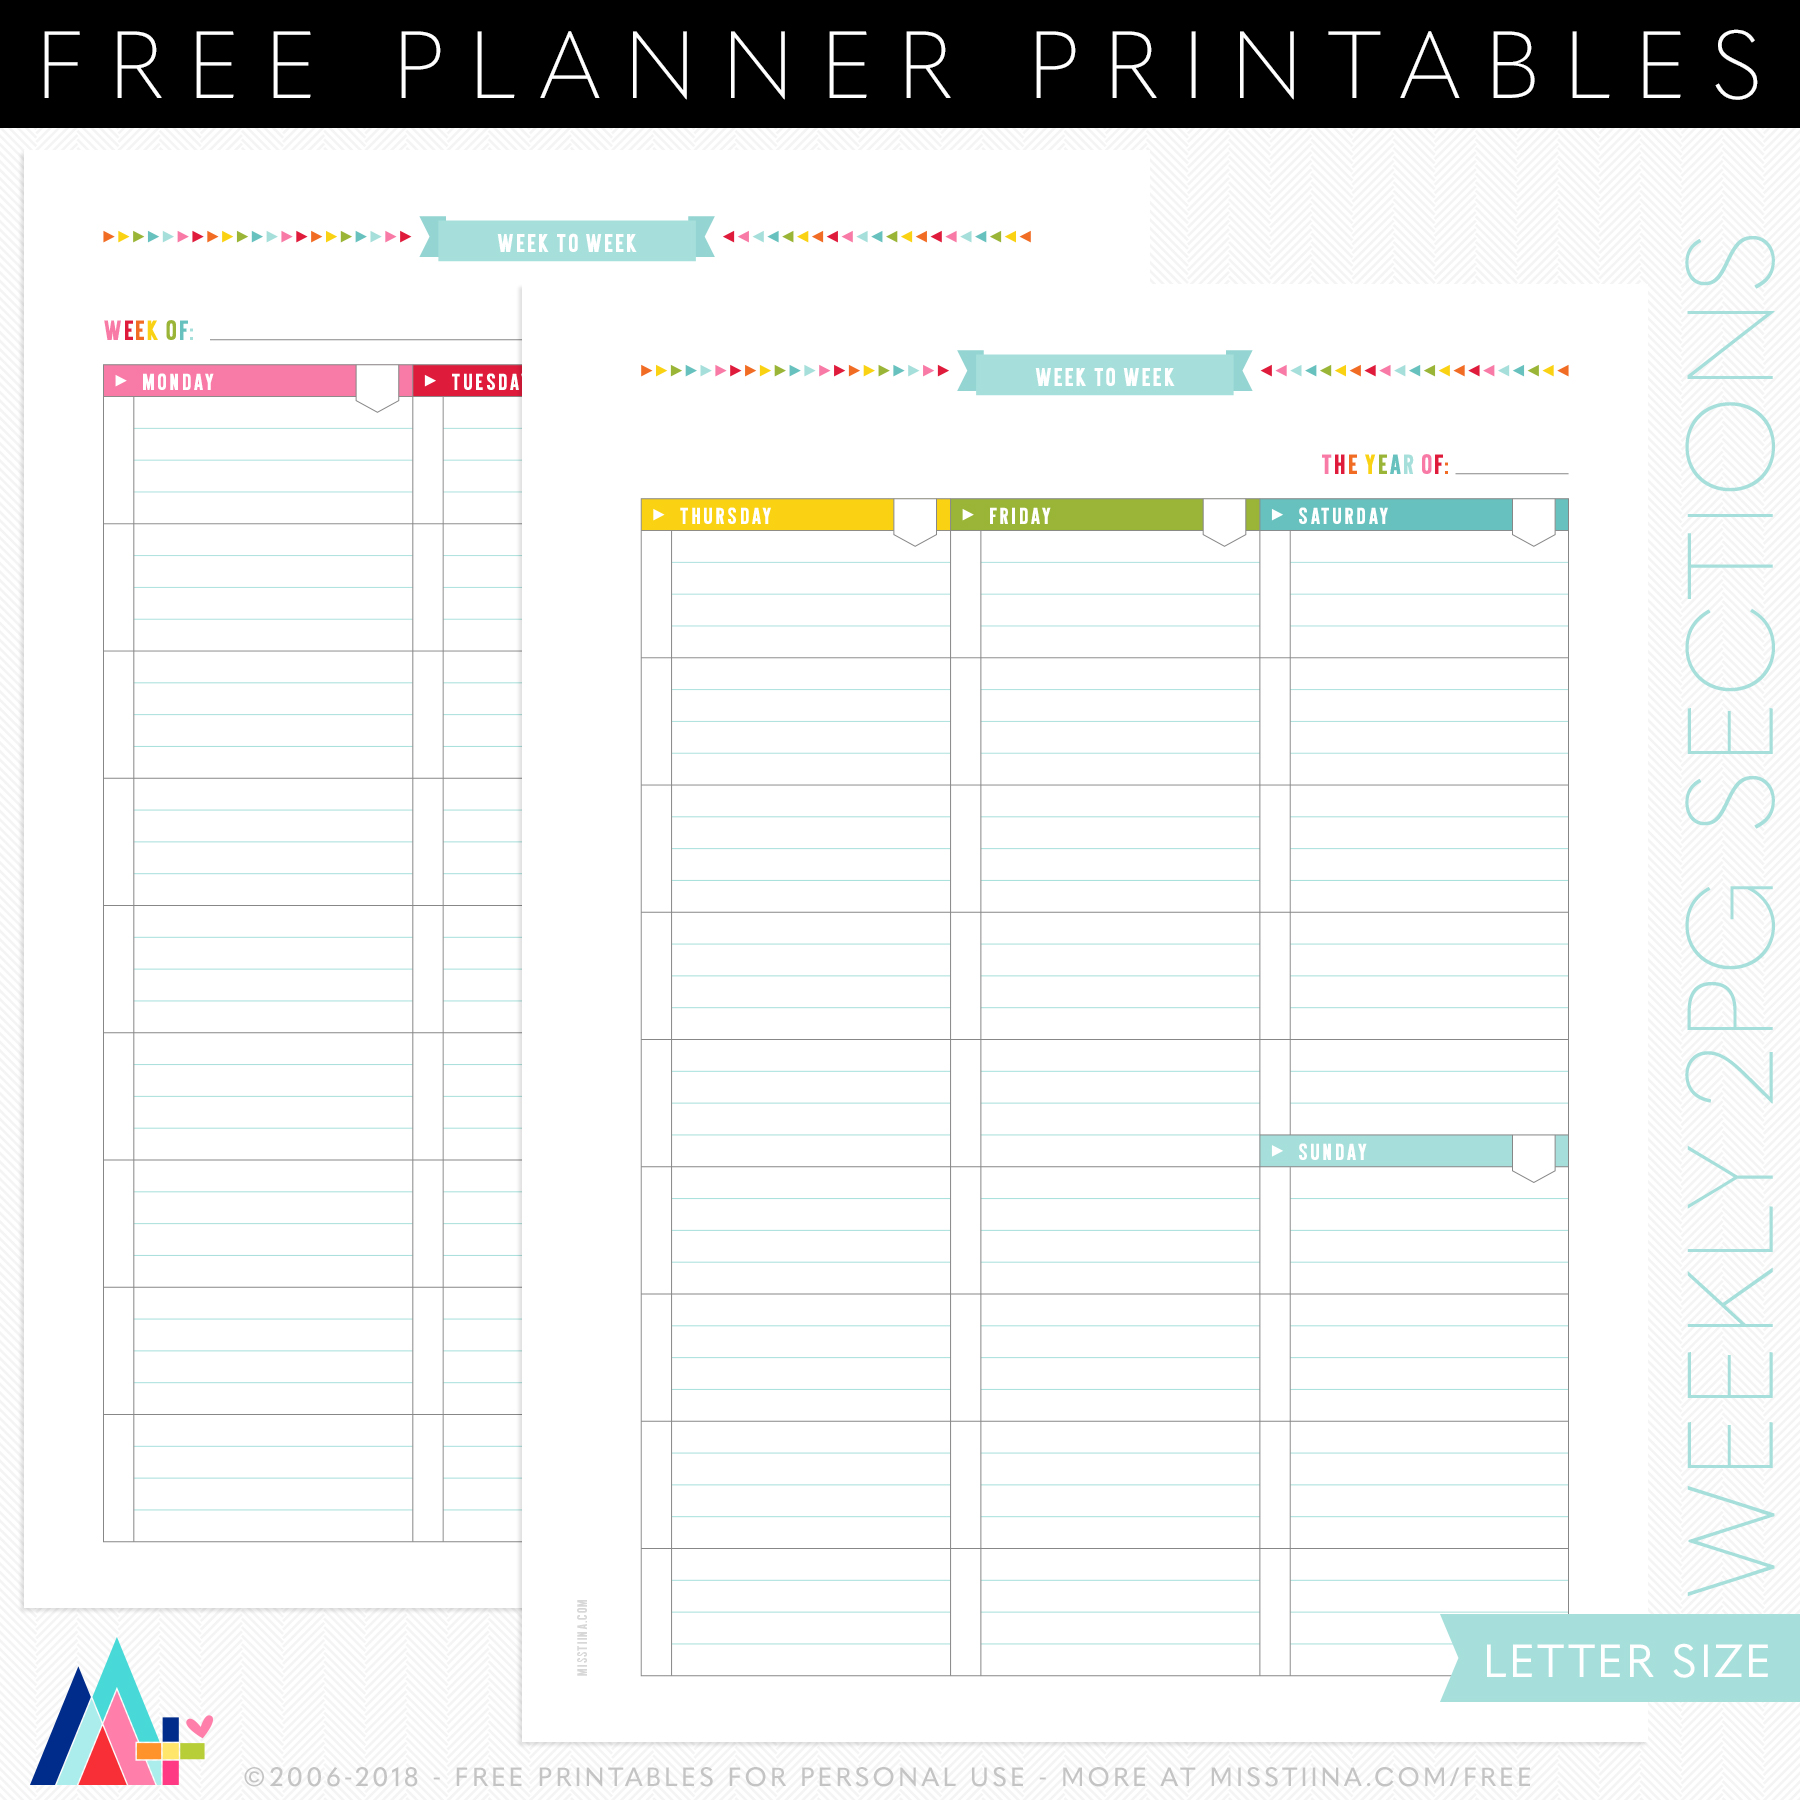 Free Planner Page Printables Misstiina Com